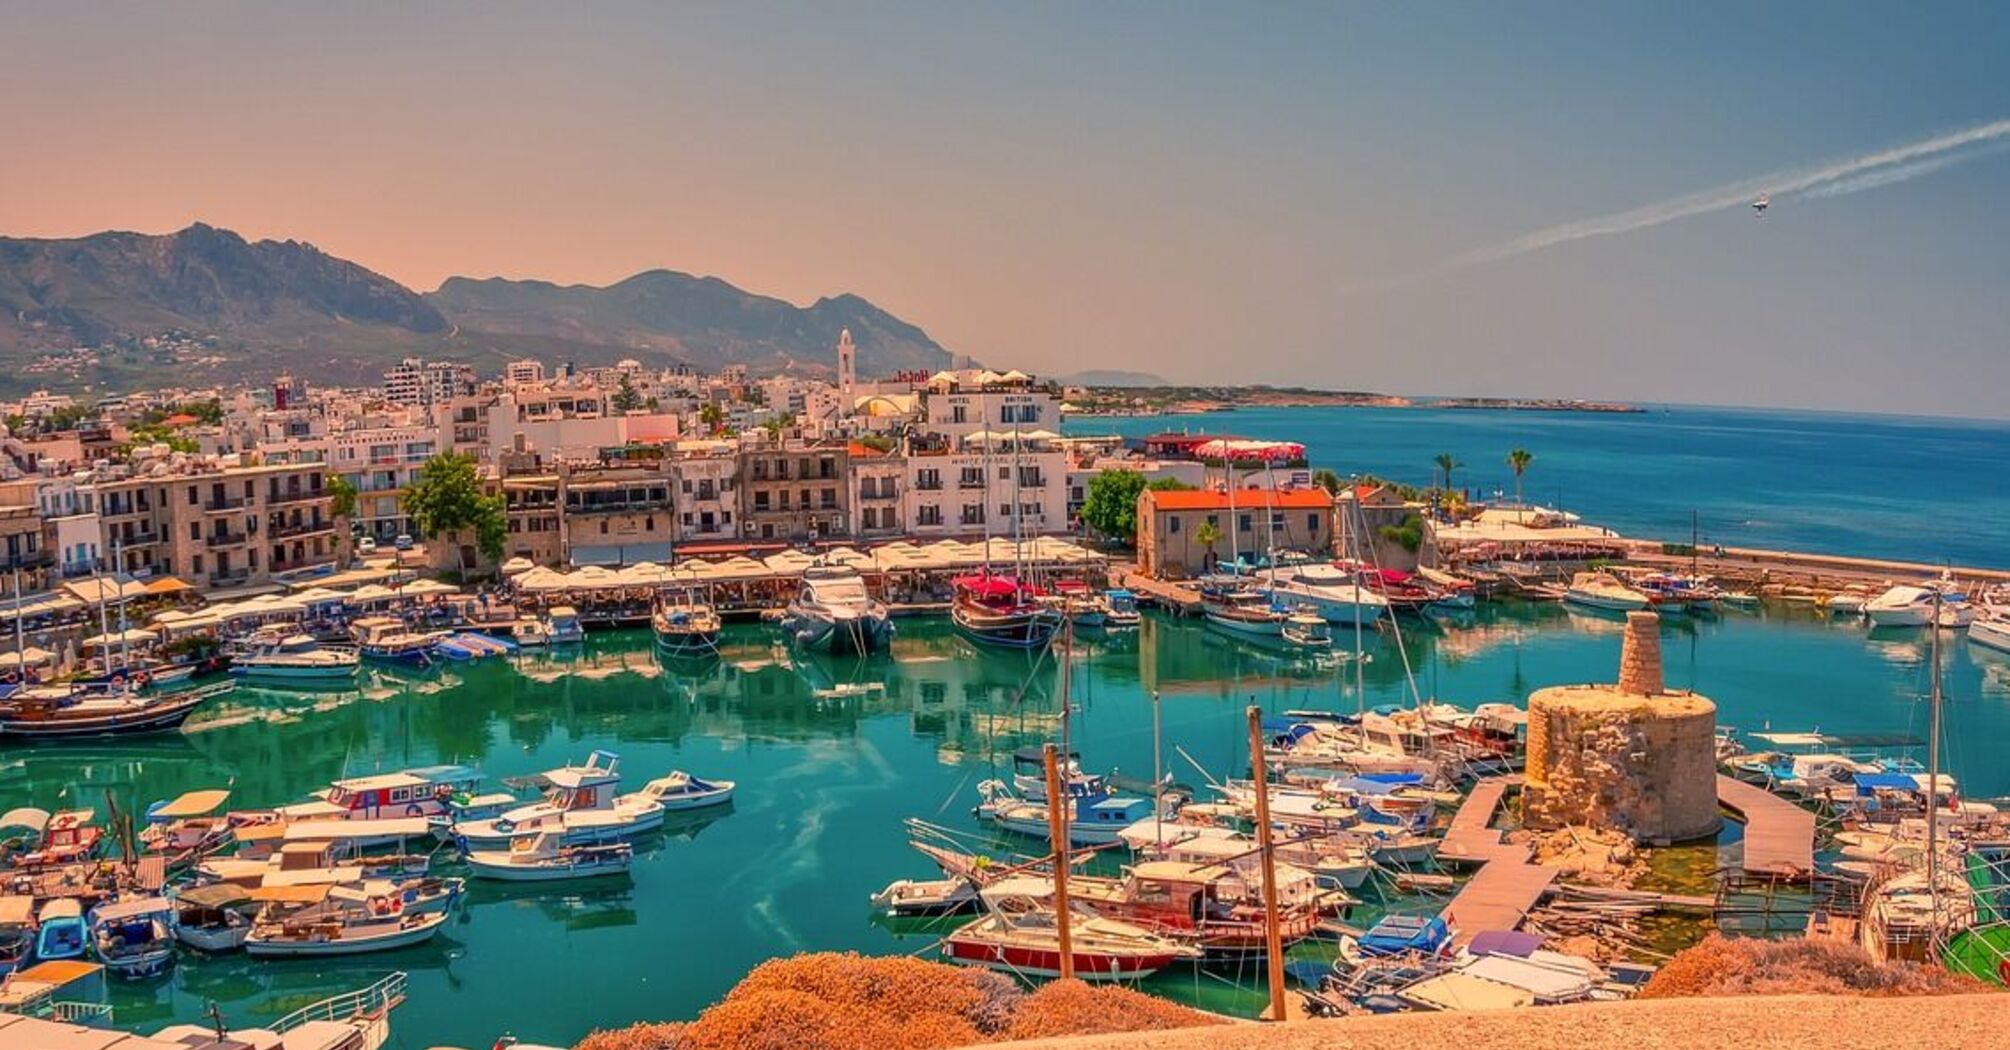 Cyprus is reintroducing the "golden visa" scheme for wealthy foreign investors